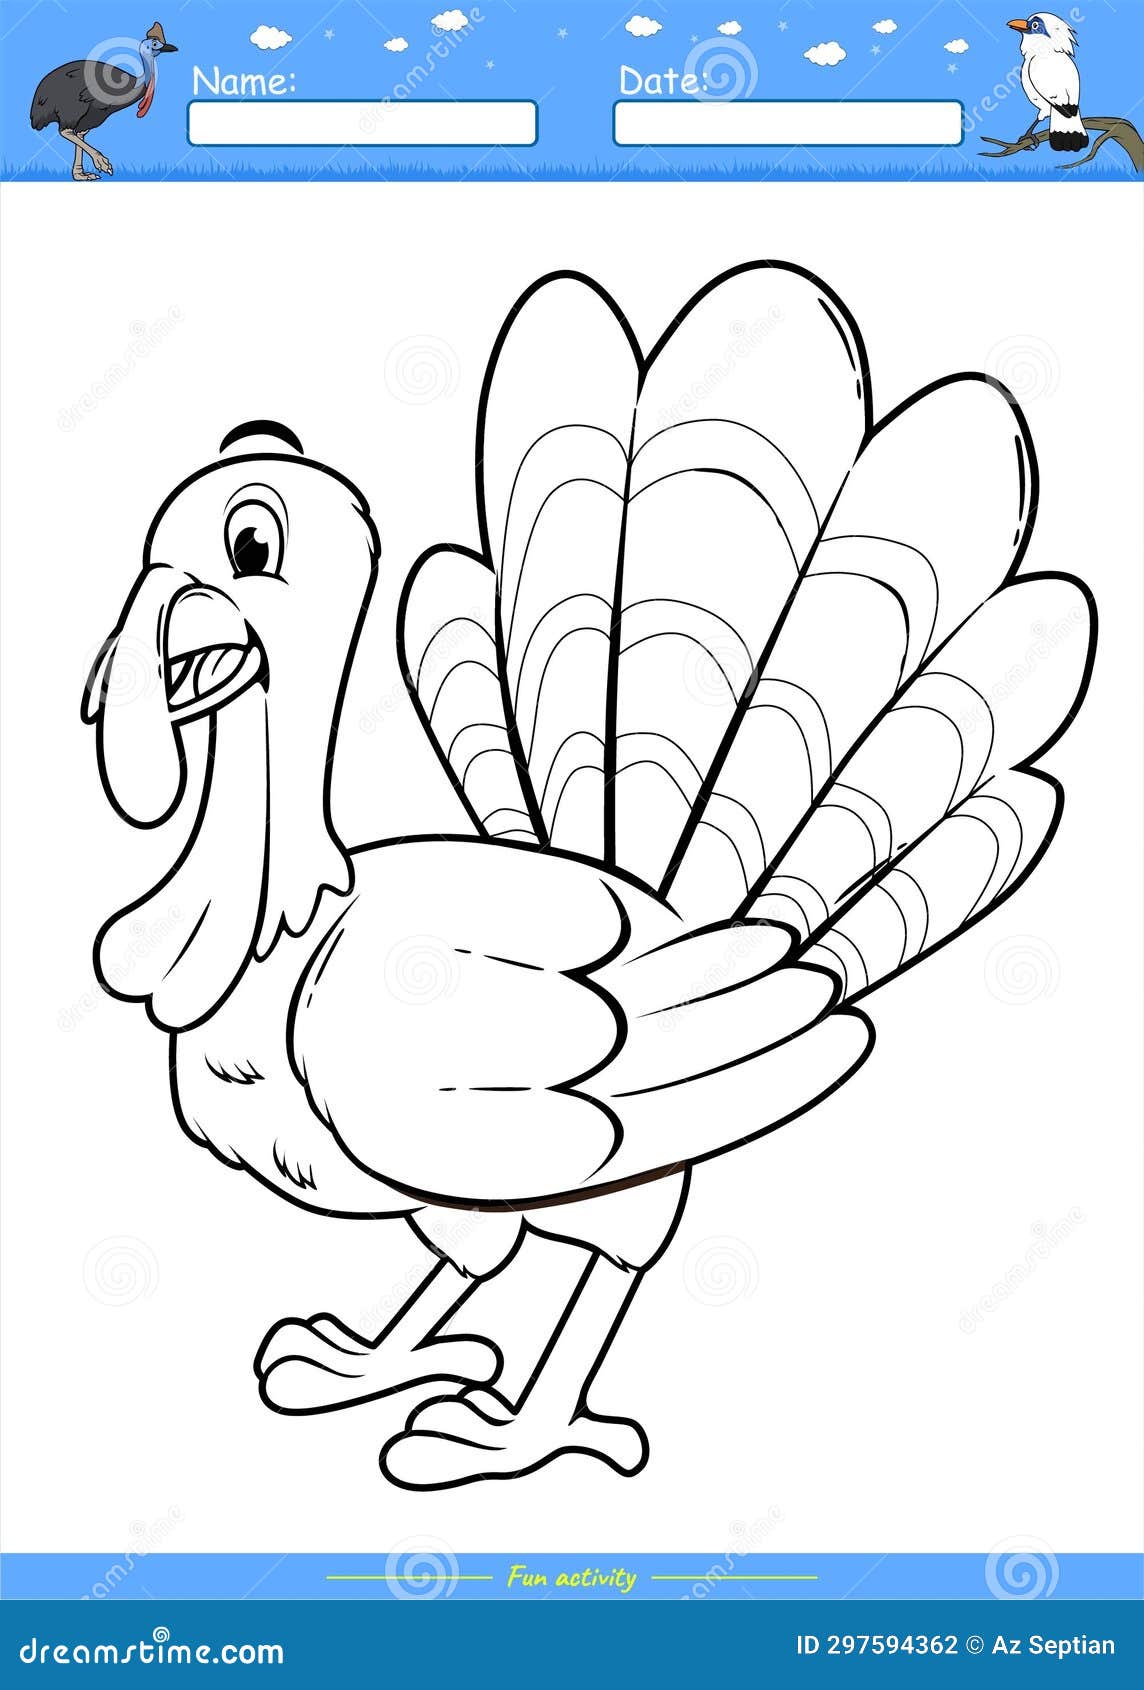 Turkey coloring sheet stock illustrations â turkey coloring sheet stock illustrations vectors clipart